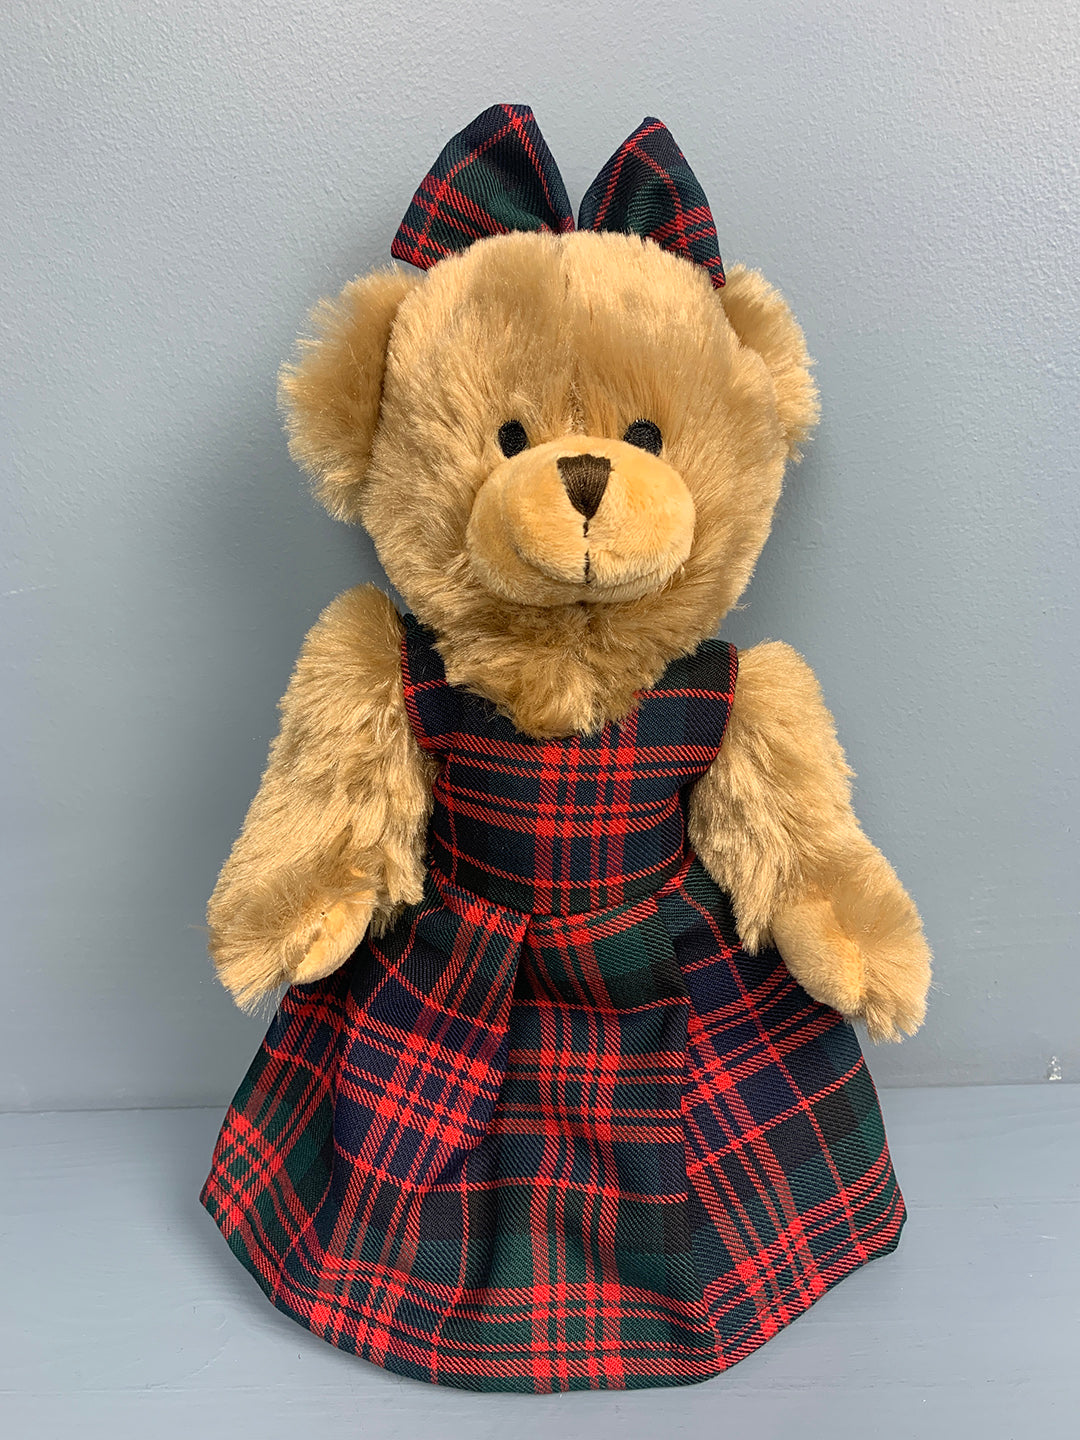 Teddy bear with tartan pinafore dress and tartan bow